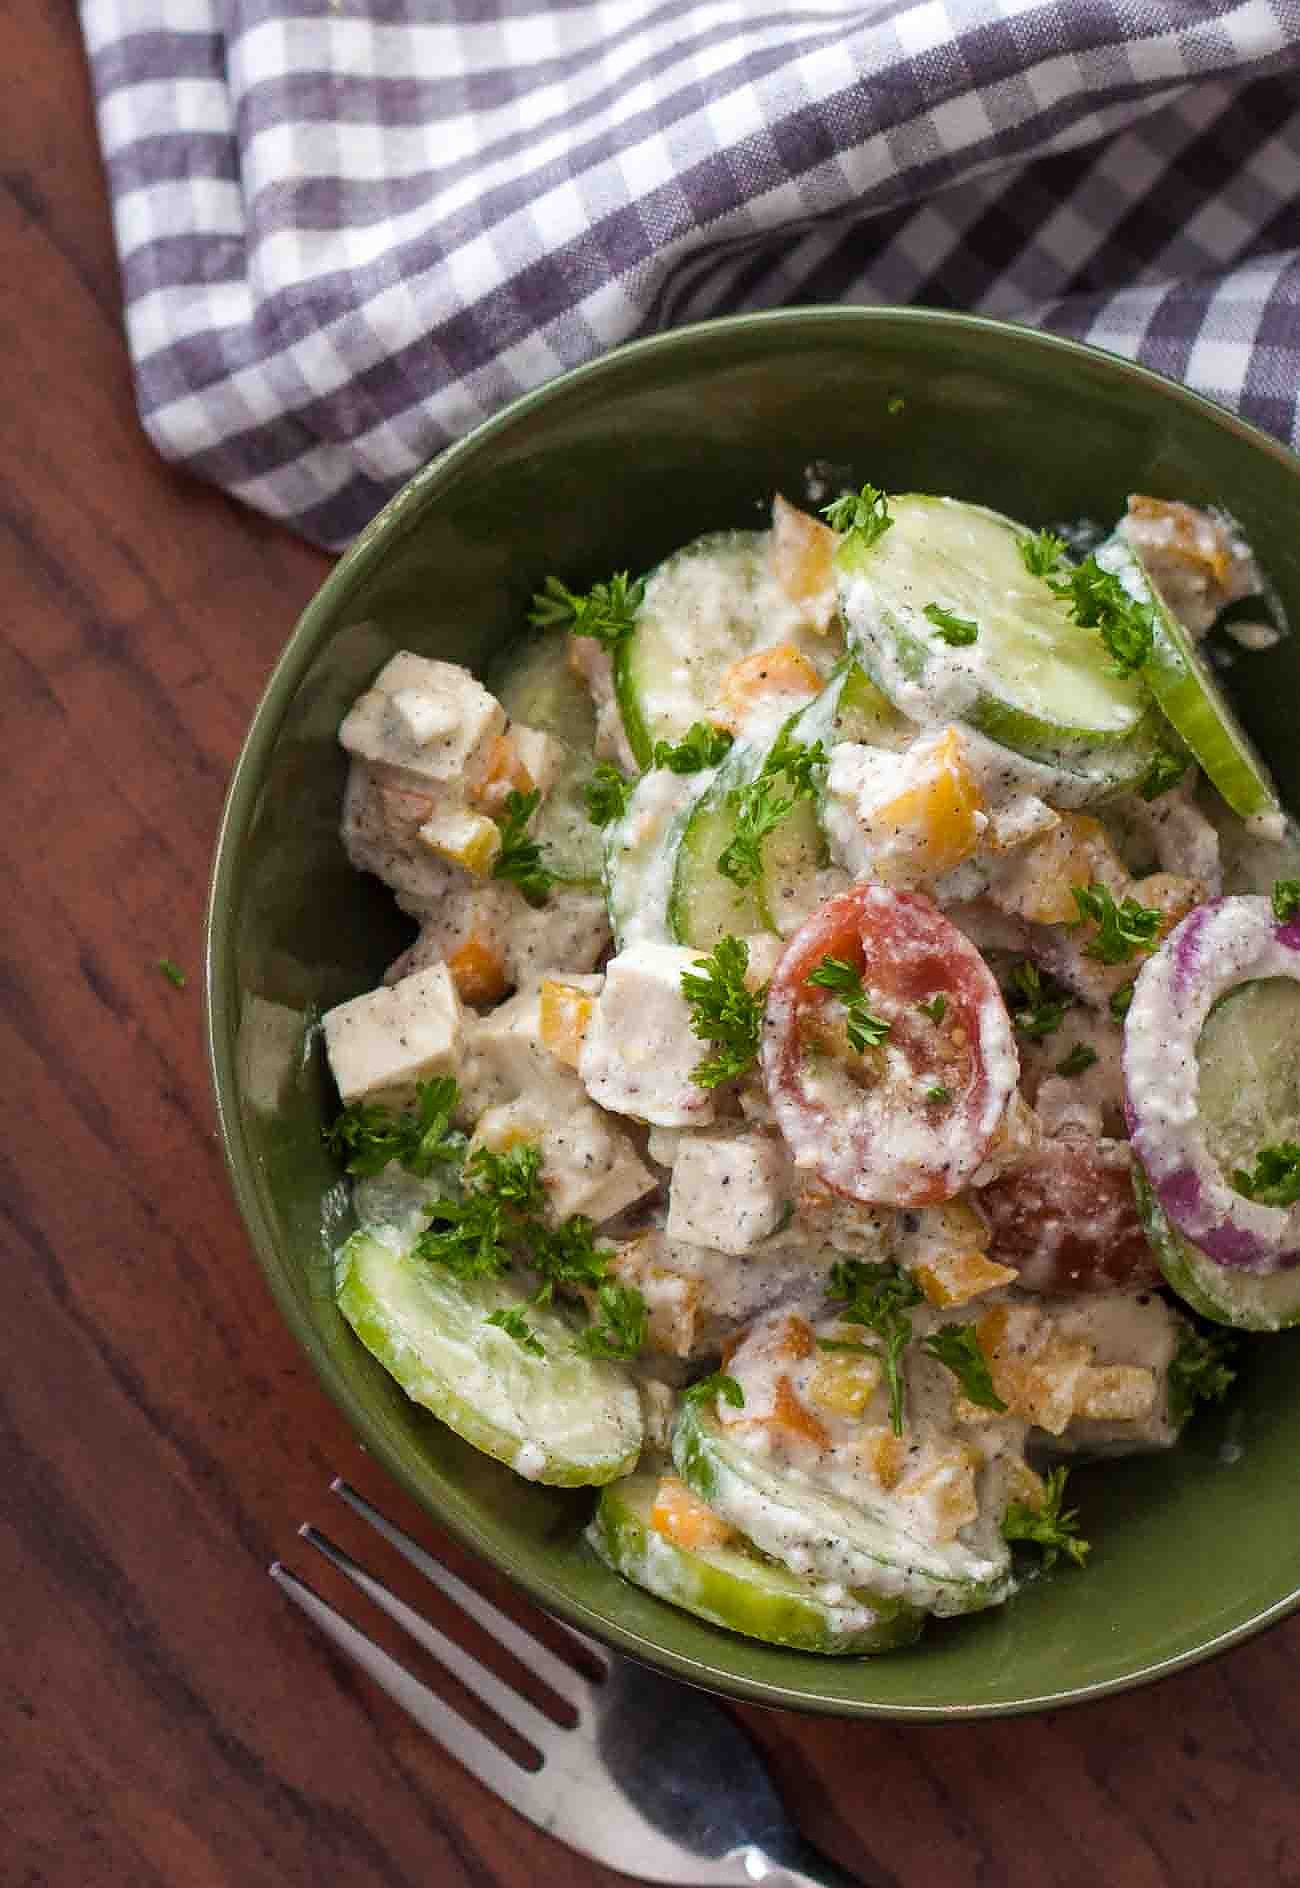 Healthy Fresh Vegetable Salad Bowl with Sour Yogurt Dressing Recipe 